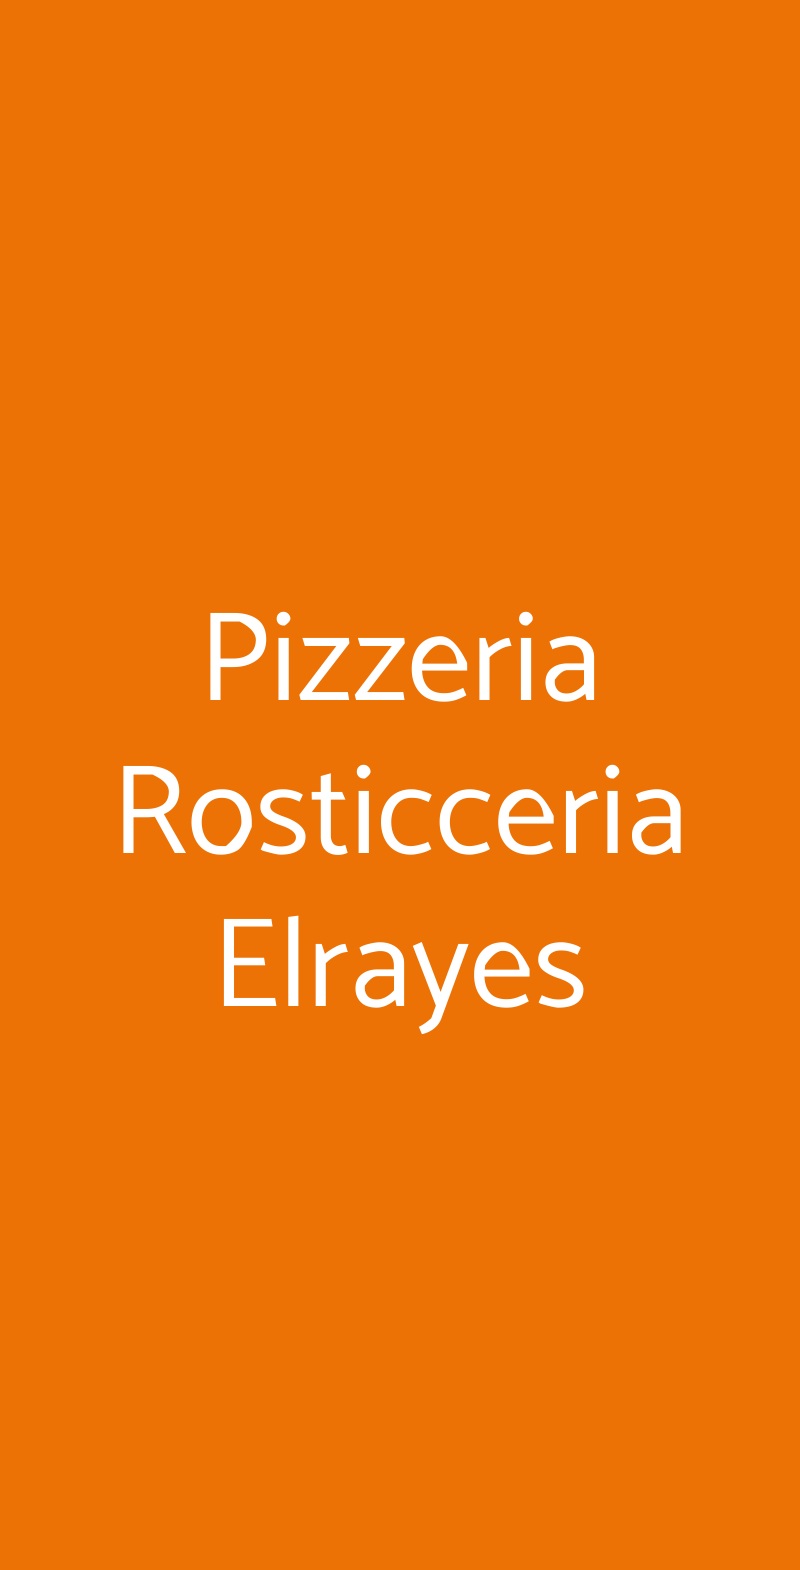 Pizzeria Rosticceria Elrayes Milano menù 1 pagina